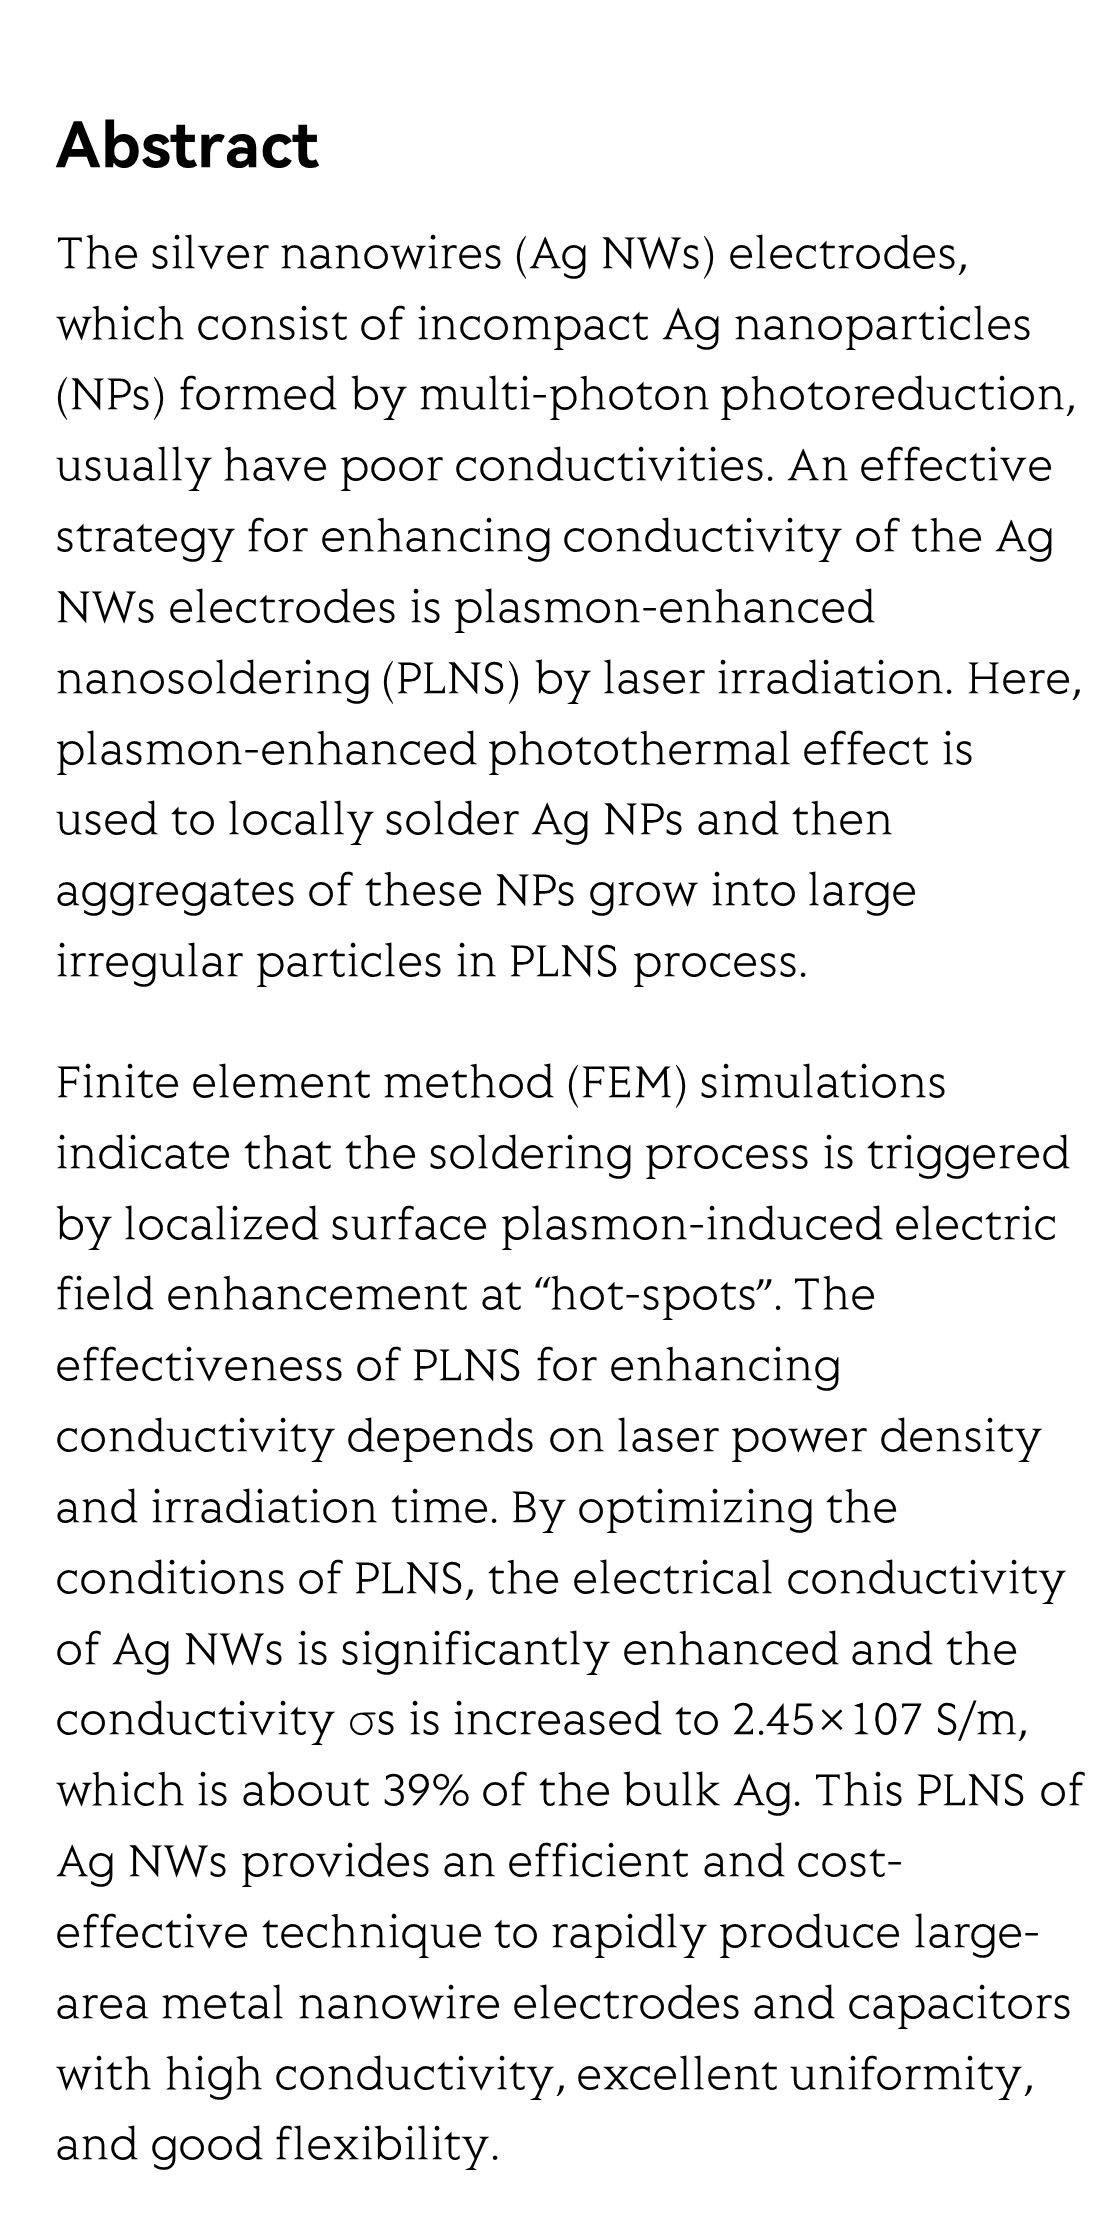 Plasmon-enhanced nanosoldering of silver nanoparticles for high-conductive nanowires electrodes_2